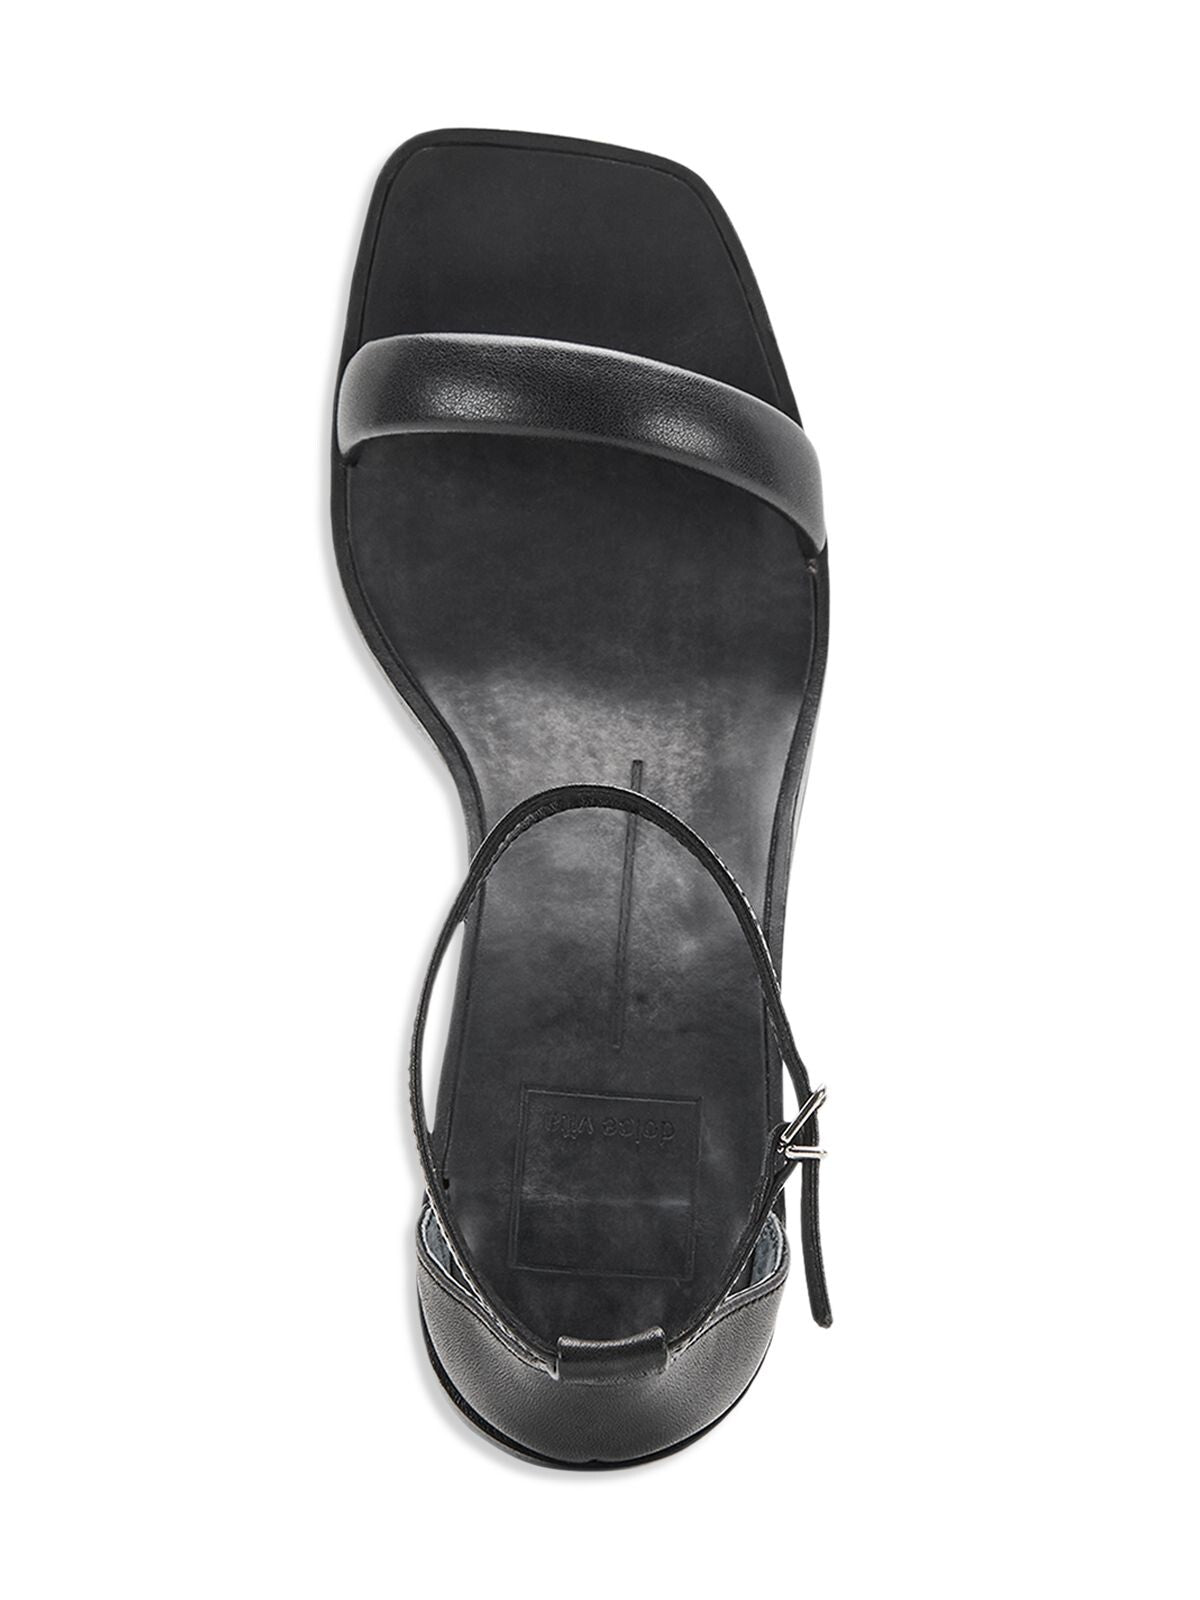 DOLCE VITA Womens Black Leopard Print Ankle Strap Fayla Square Toe Block Heel Buckle Leather Heeled Sandal 9.5